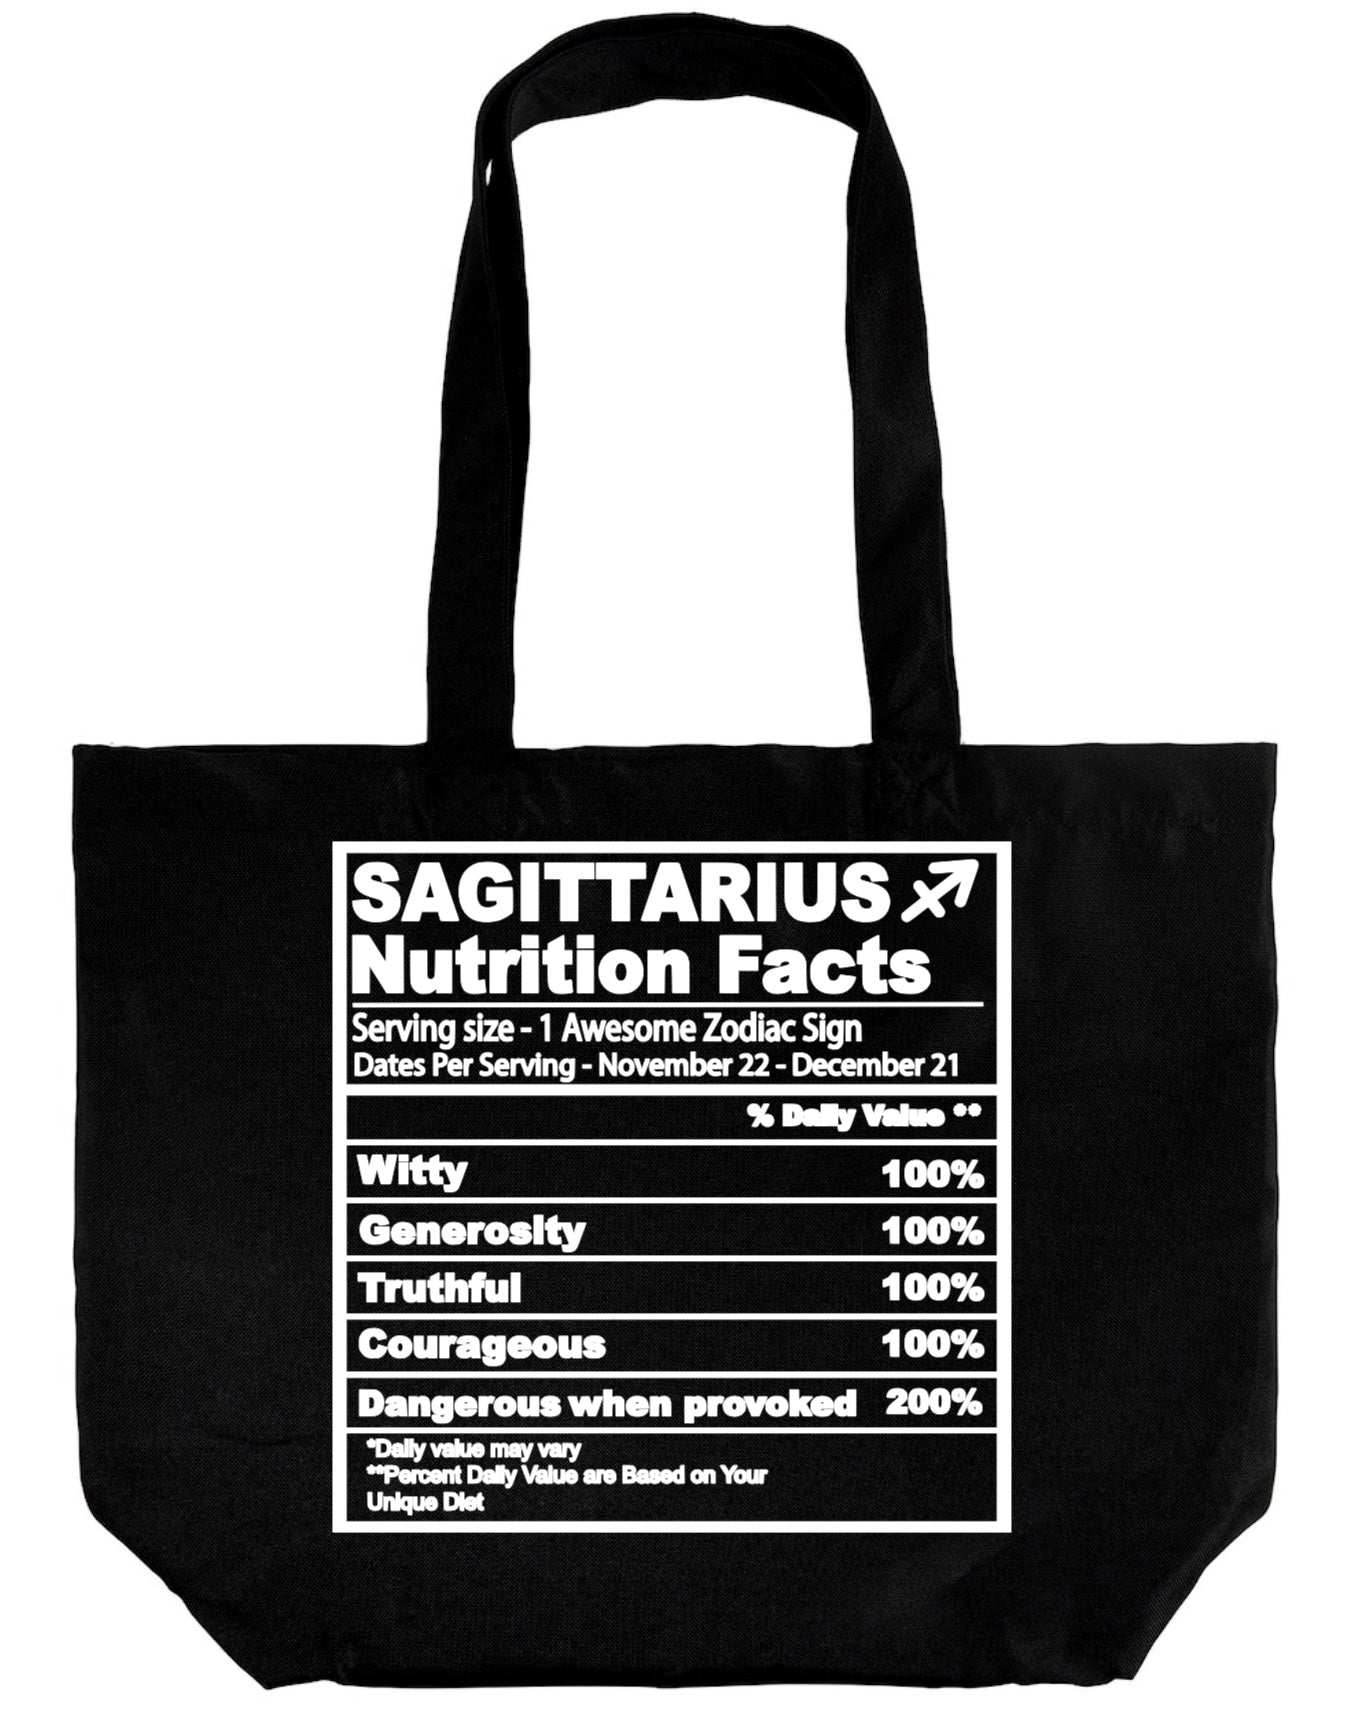 Sagittarius Nutrition Facts Tote